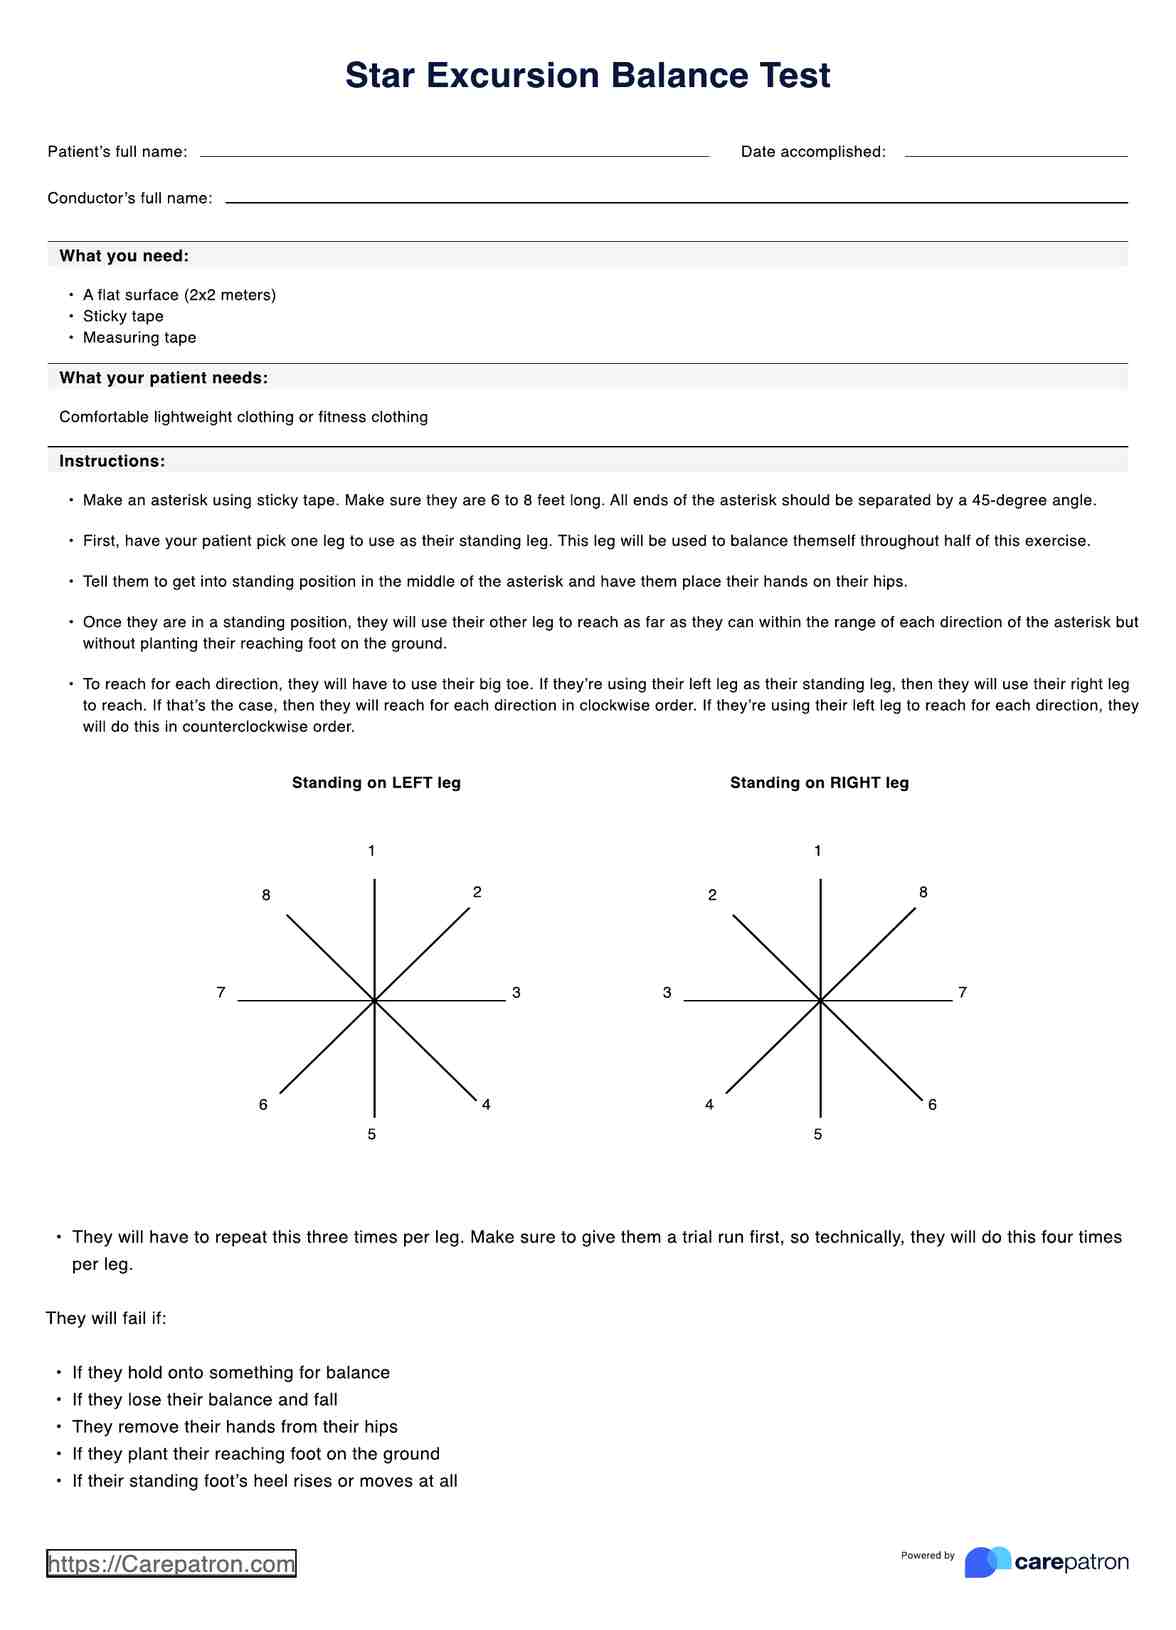 Star Excursion Balance Test PDF Example